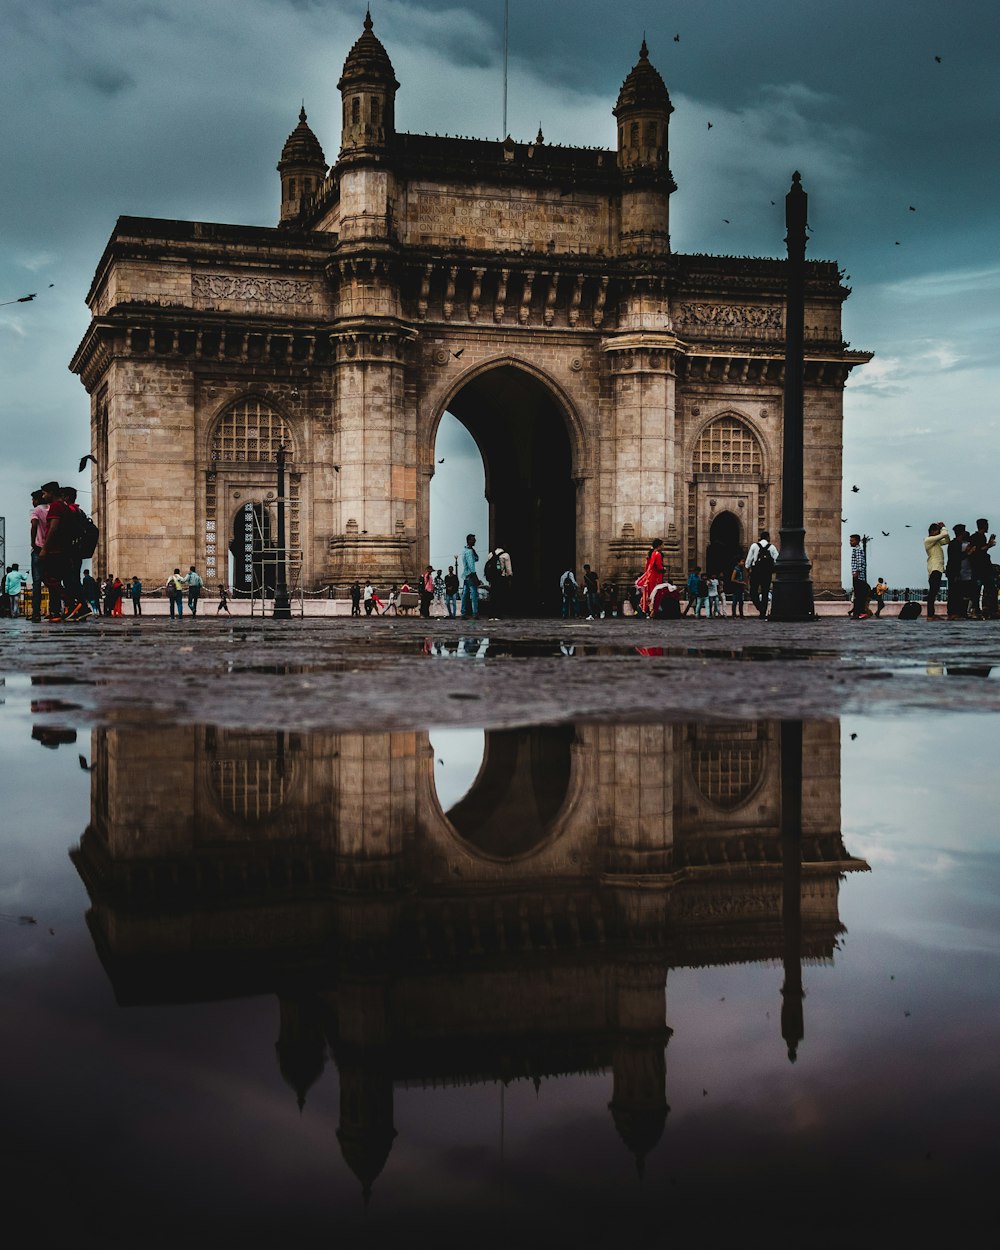 500 Stunning Mumbai Pictures Hd Download Free Images On Unsplash